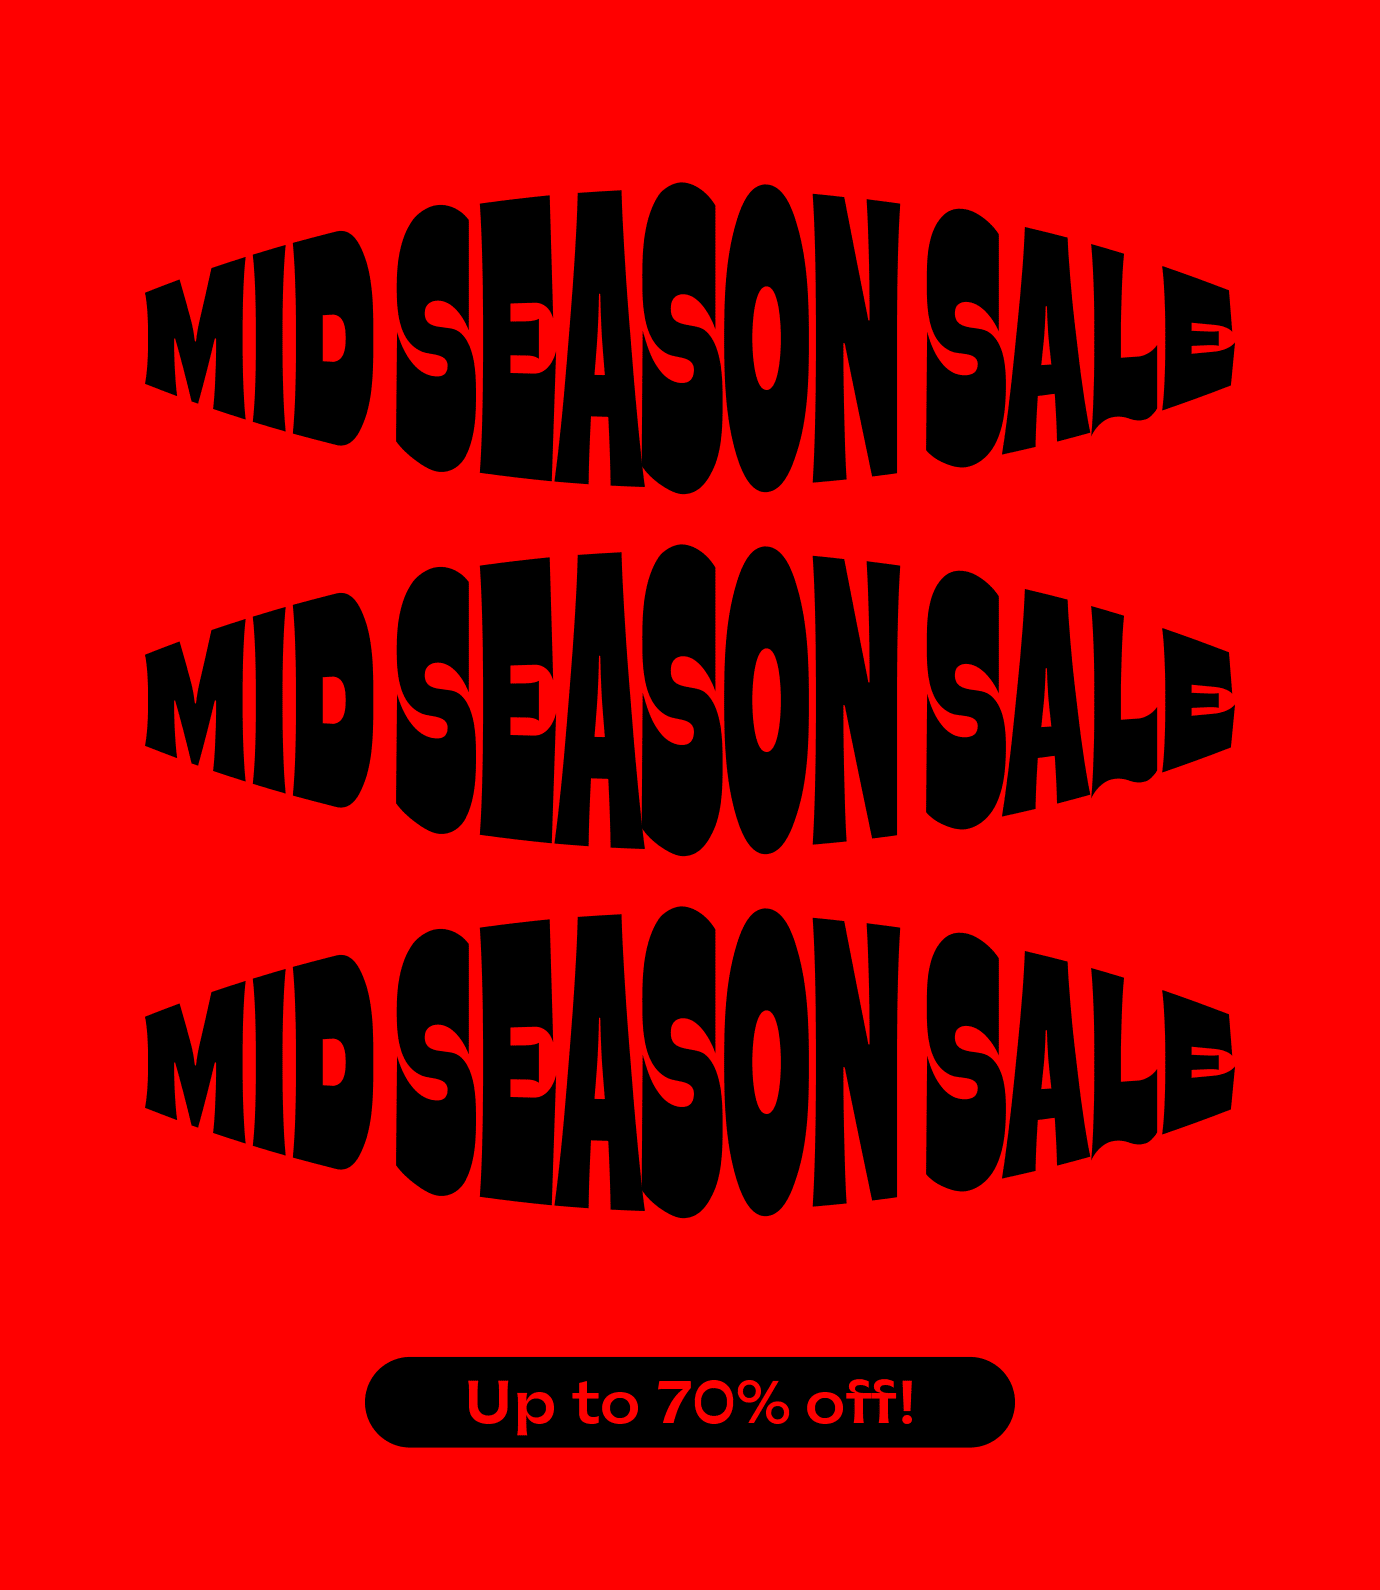 SNSにて、最大70%OFFの「ミッドシーズン セール」が開催 (sneakersnstuff Midseason Sale)